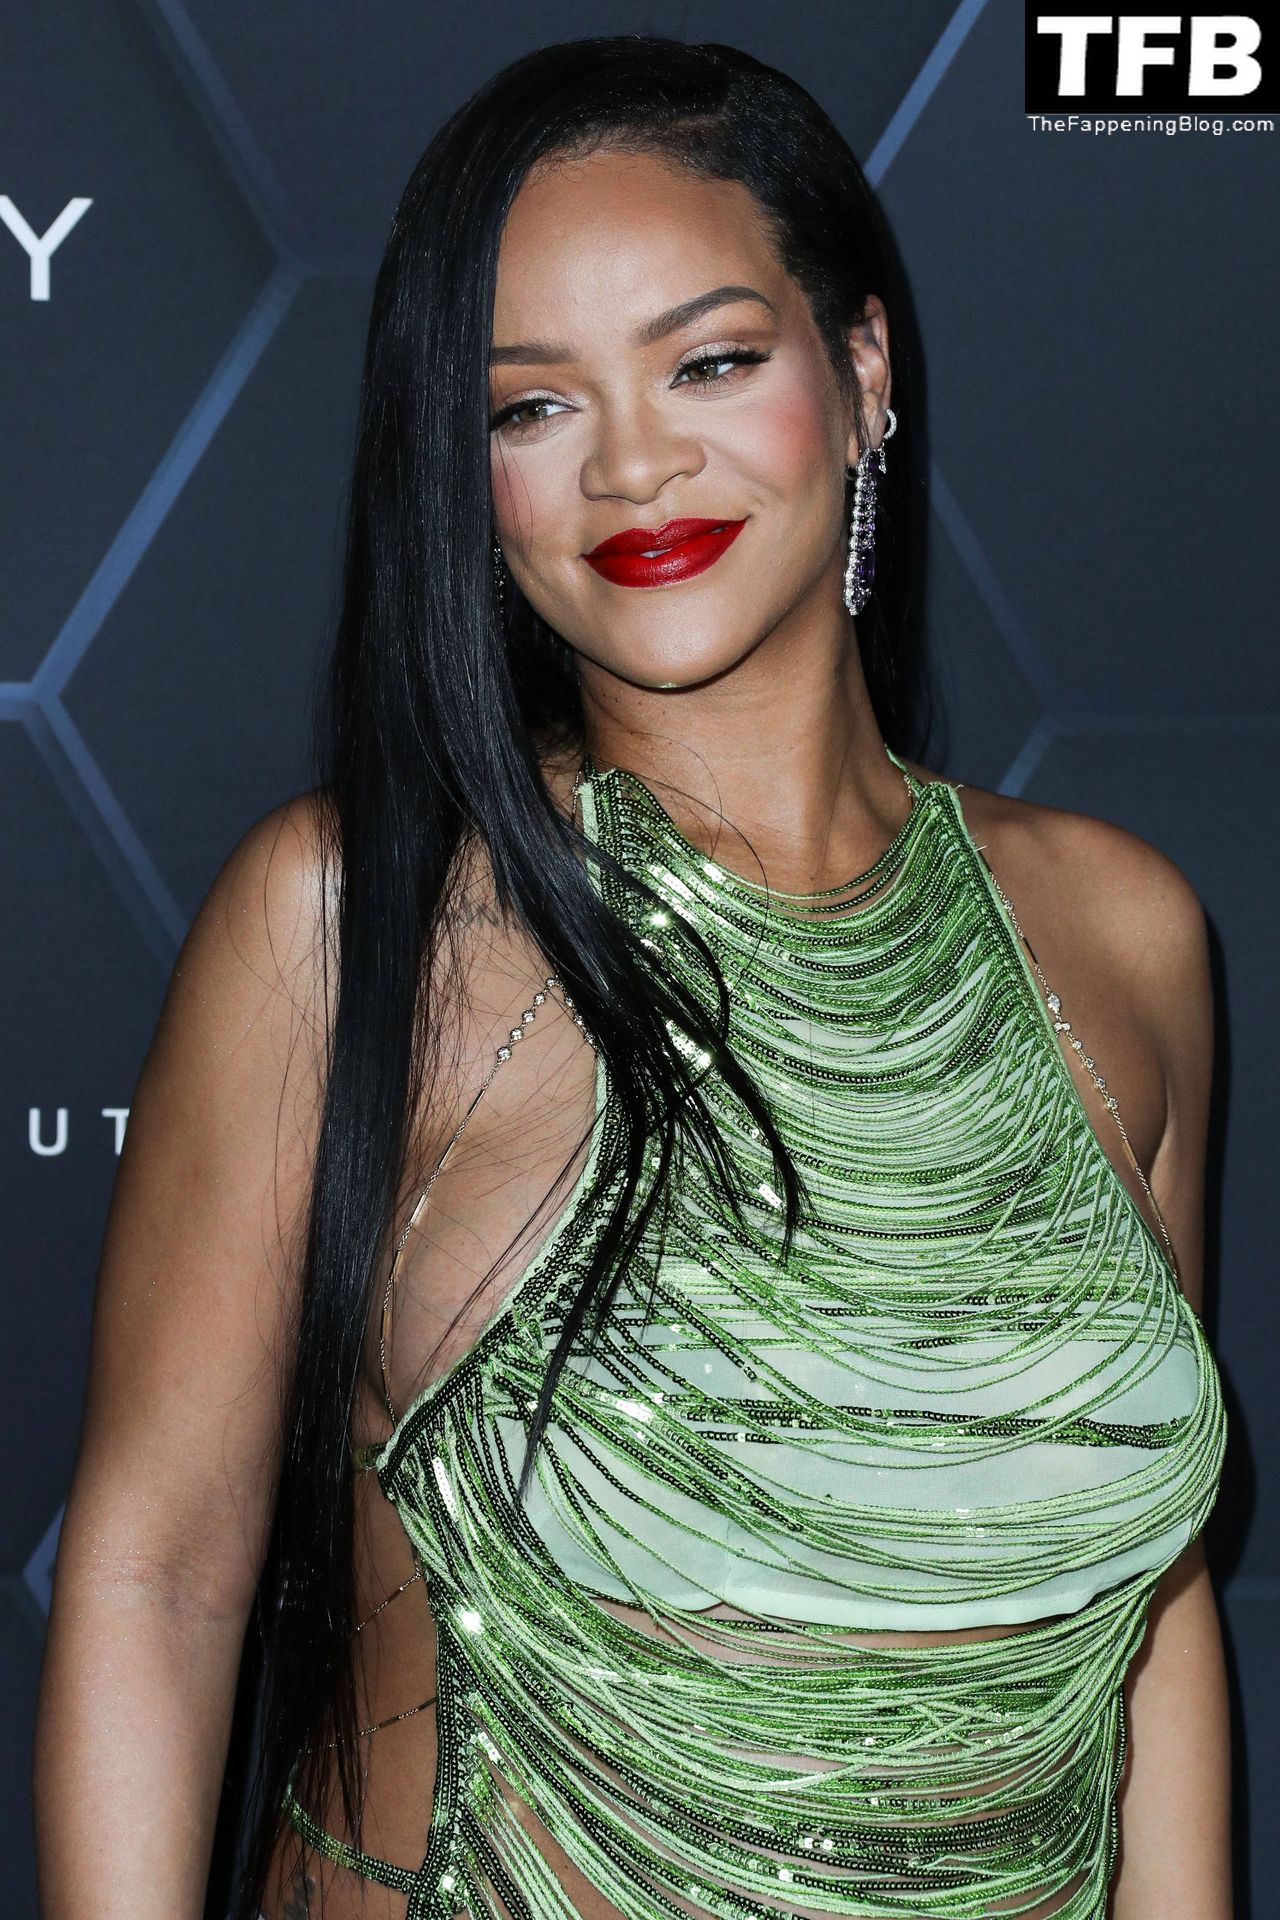 Rihanna-Sexy-The-Fappening-Blog-151.jpg